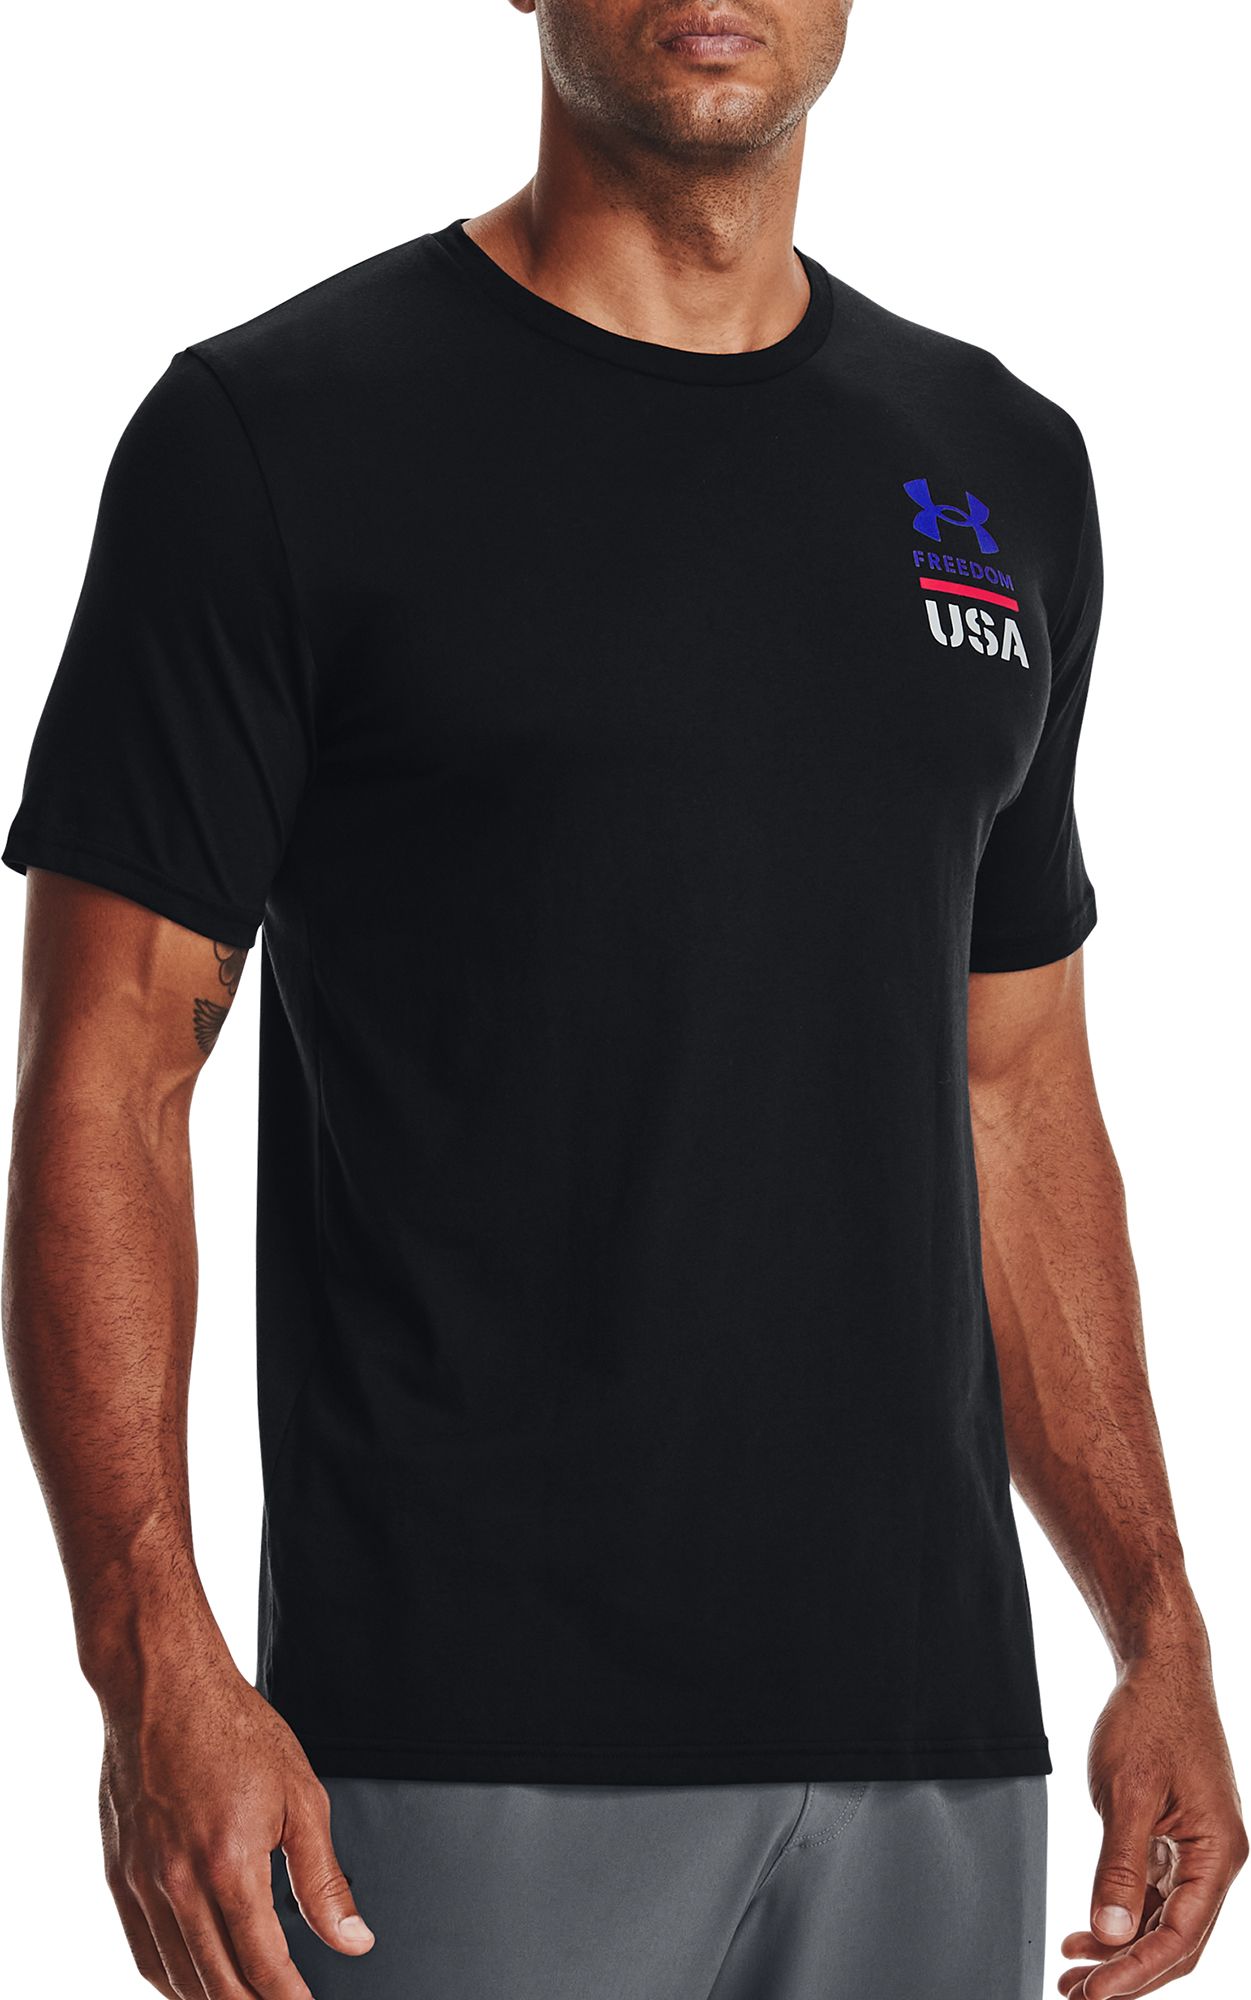 Under Armour Mens Freedom USA T-Shirt